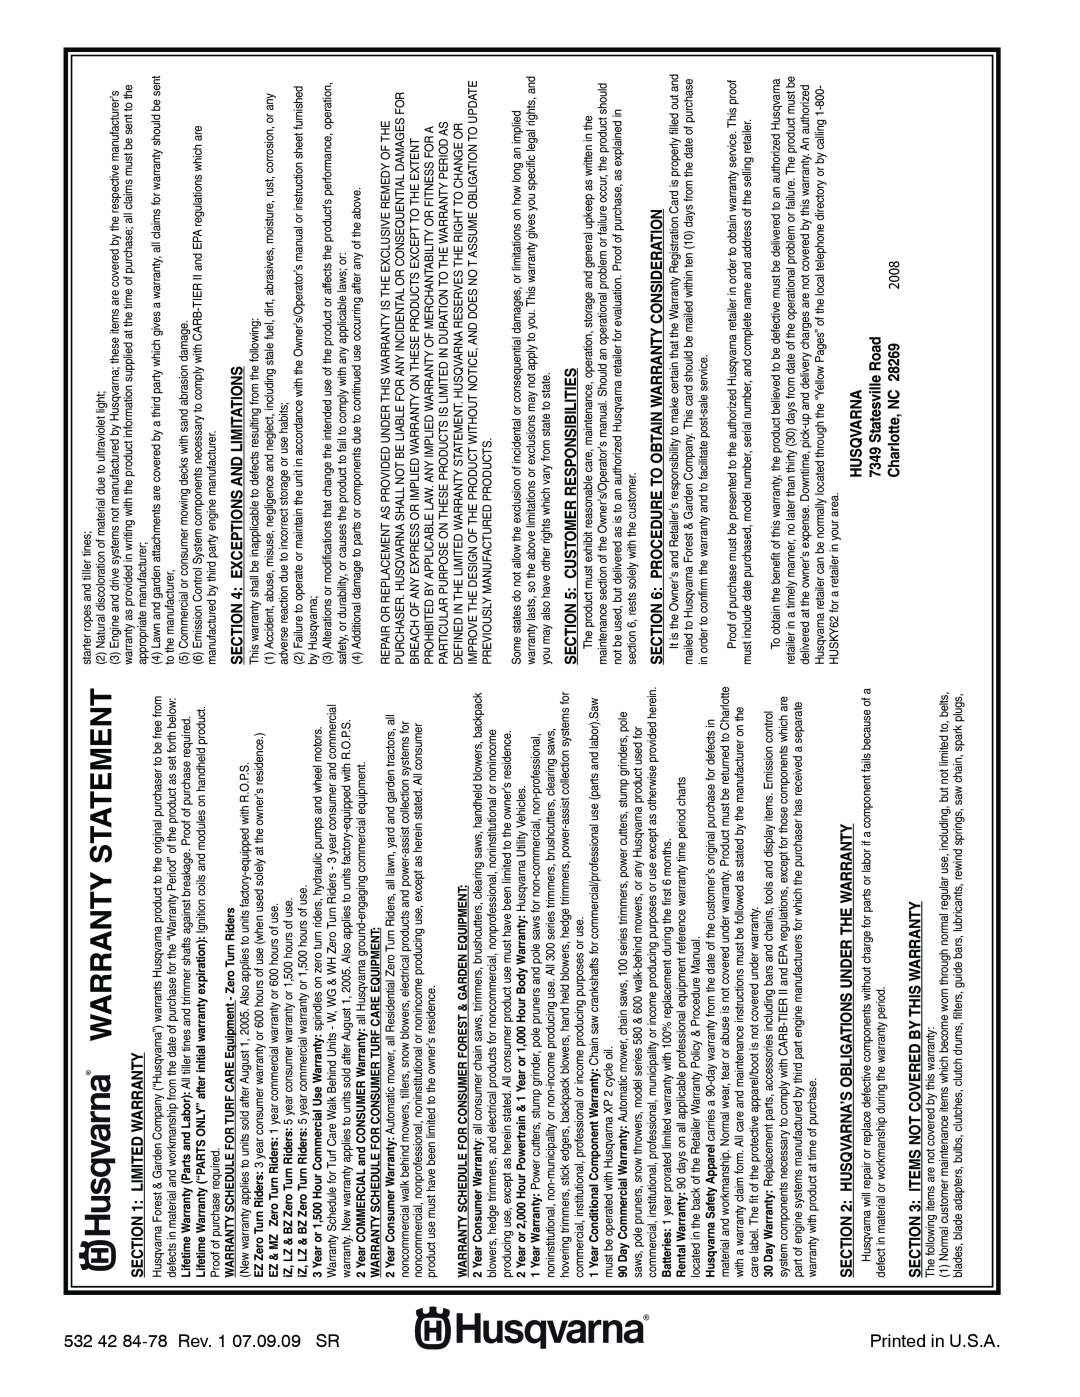 Husqvarna 14527SB-LS Warranty Statement, 2008, Charlotte, NC, WARRANTY SCHEDULE FOR TURF CARE Equipment - Zero Turn Riders 